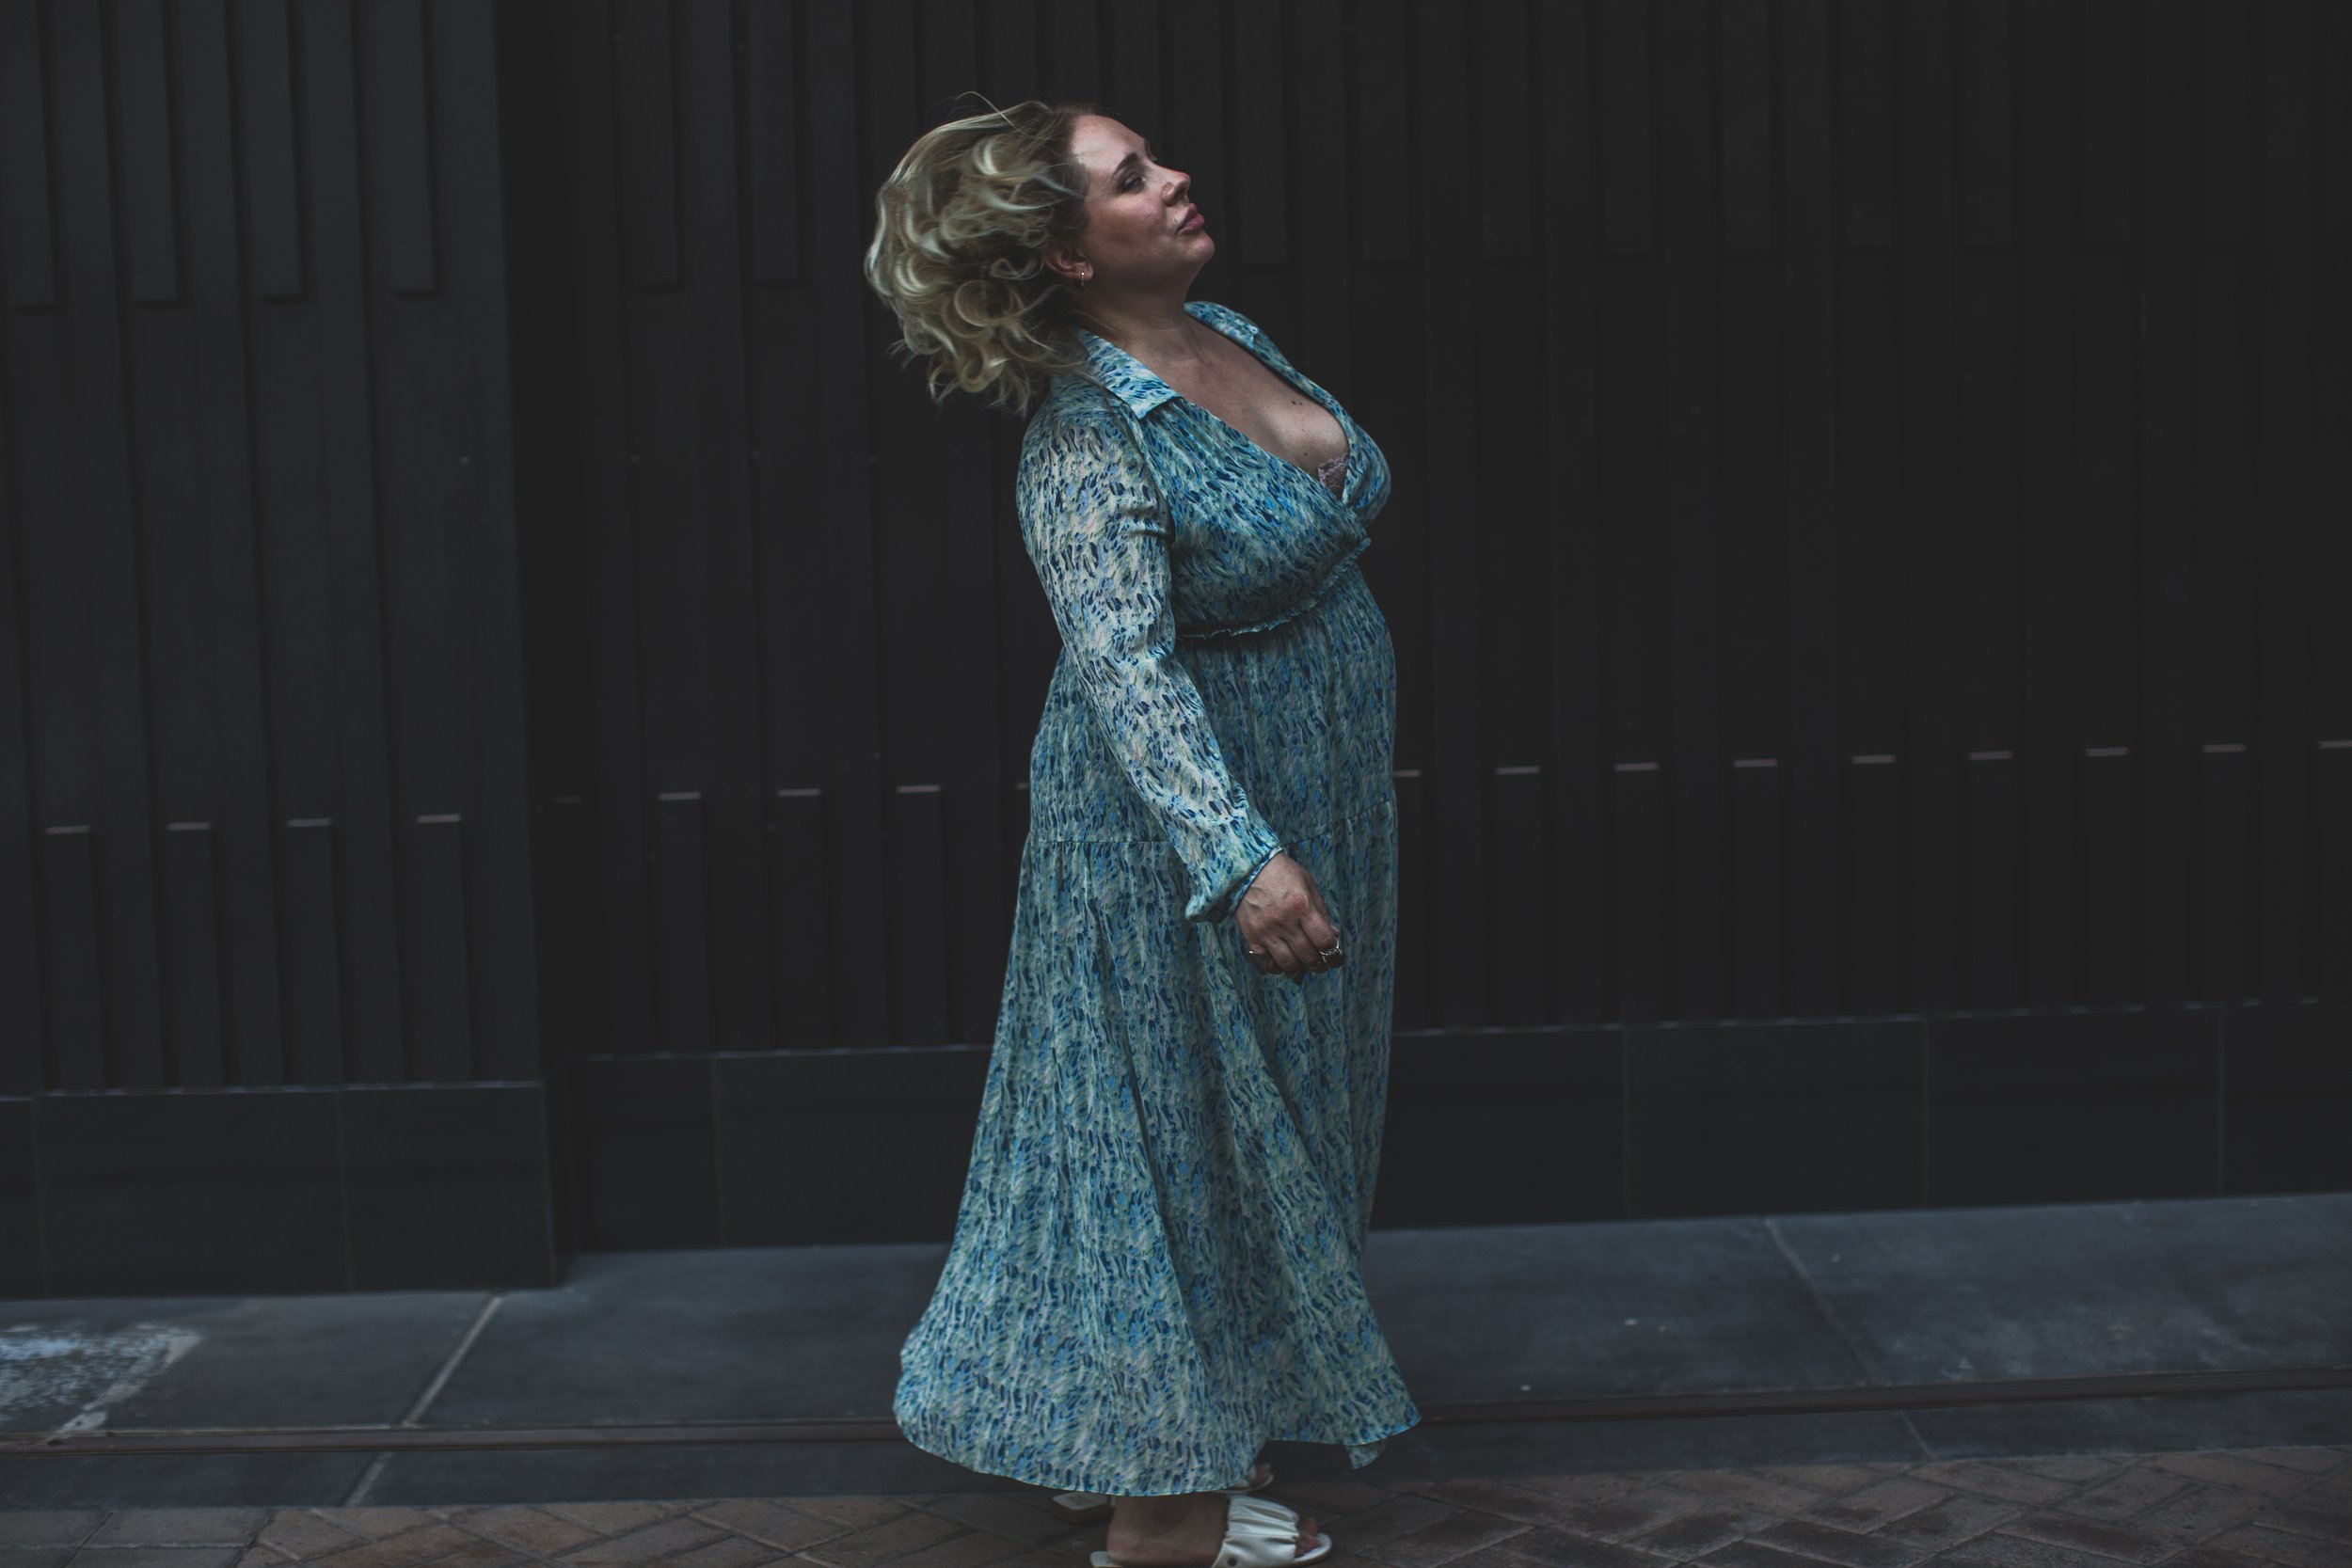 Woman poses in long blue dress for the #portraitproject by Creative Phoenix Photographer; Jennifer Lind Schutsky.